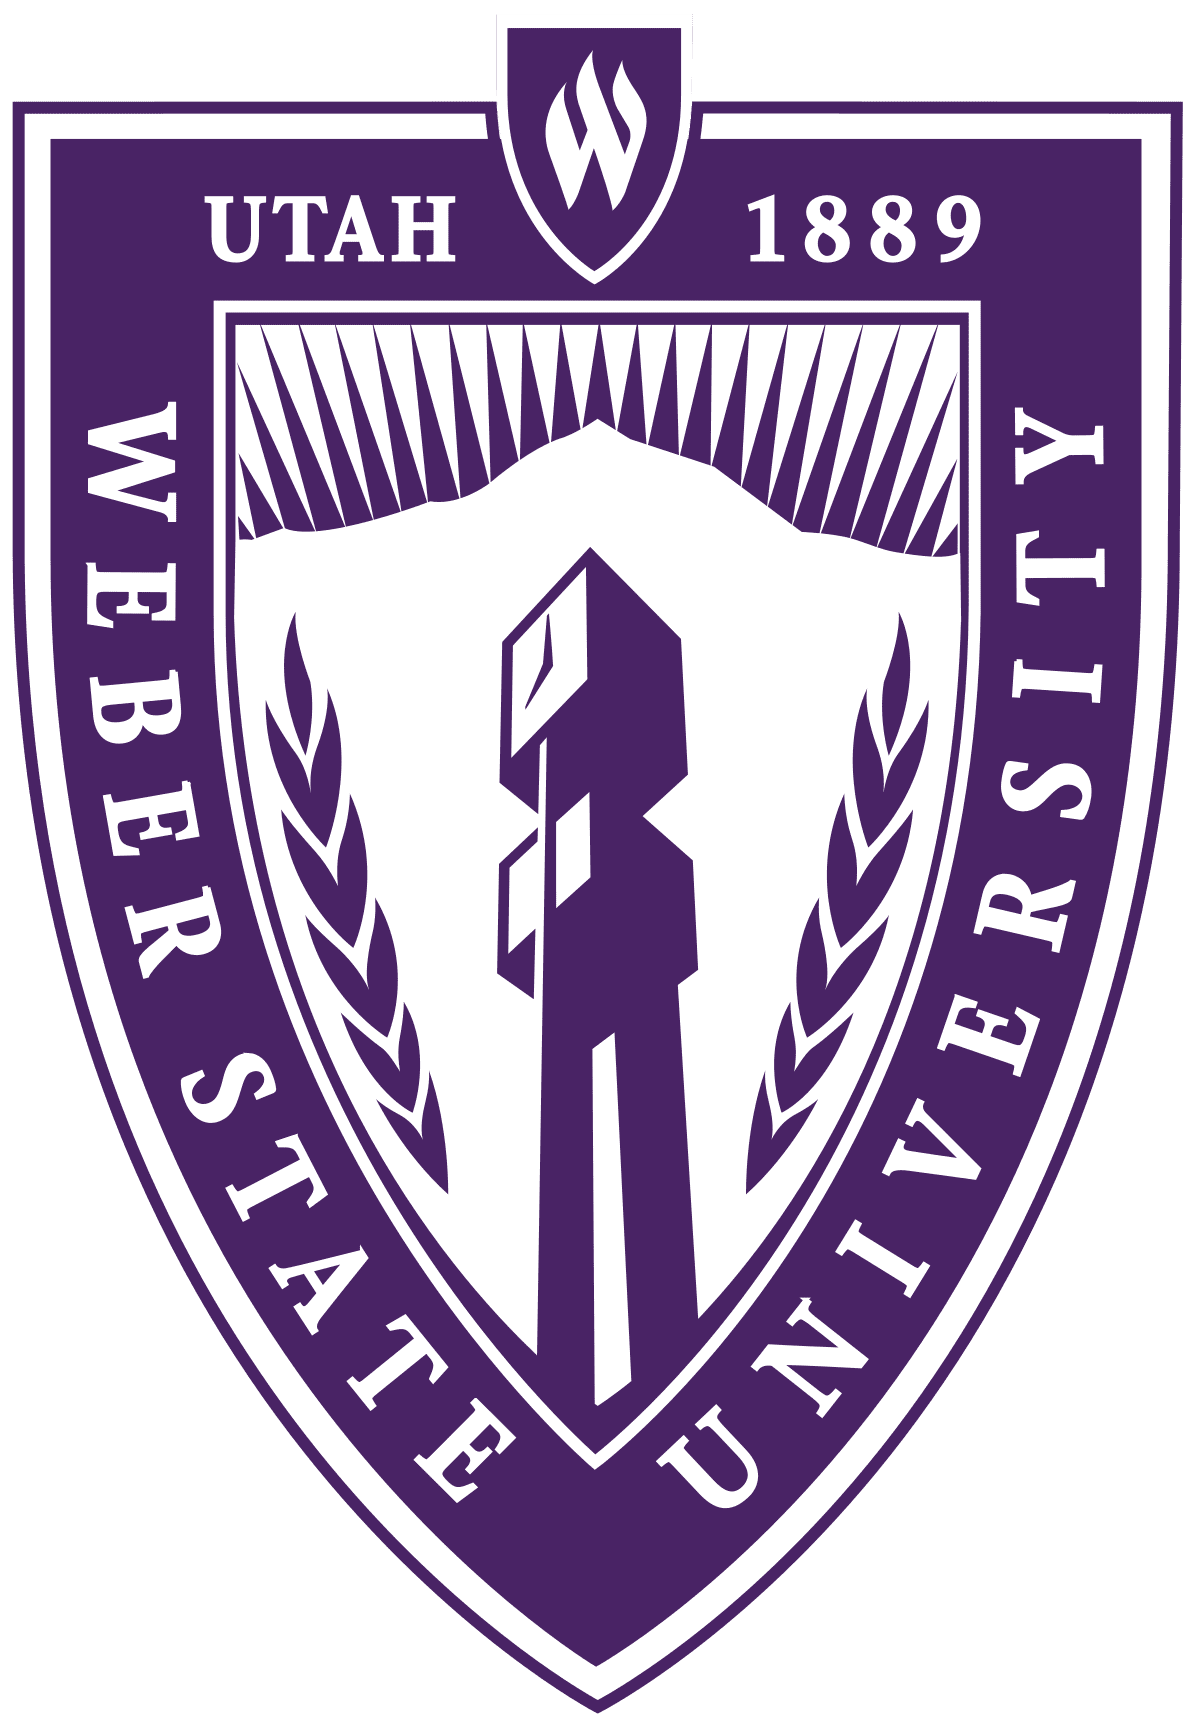 Weber State University 